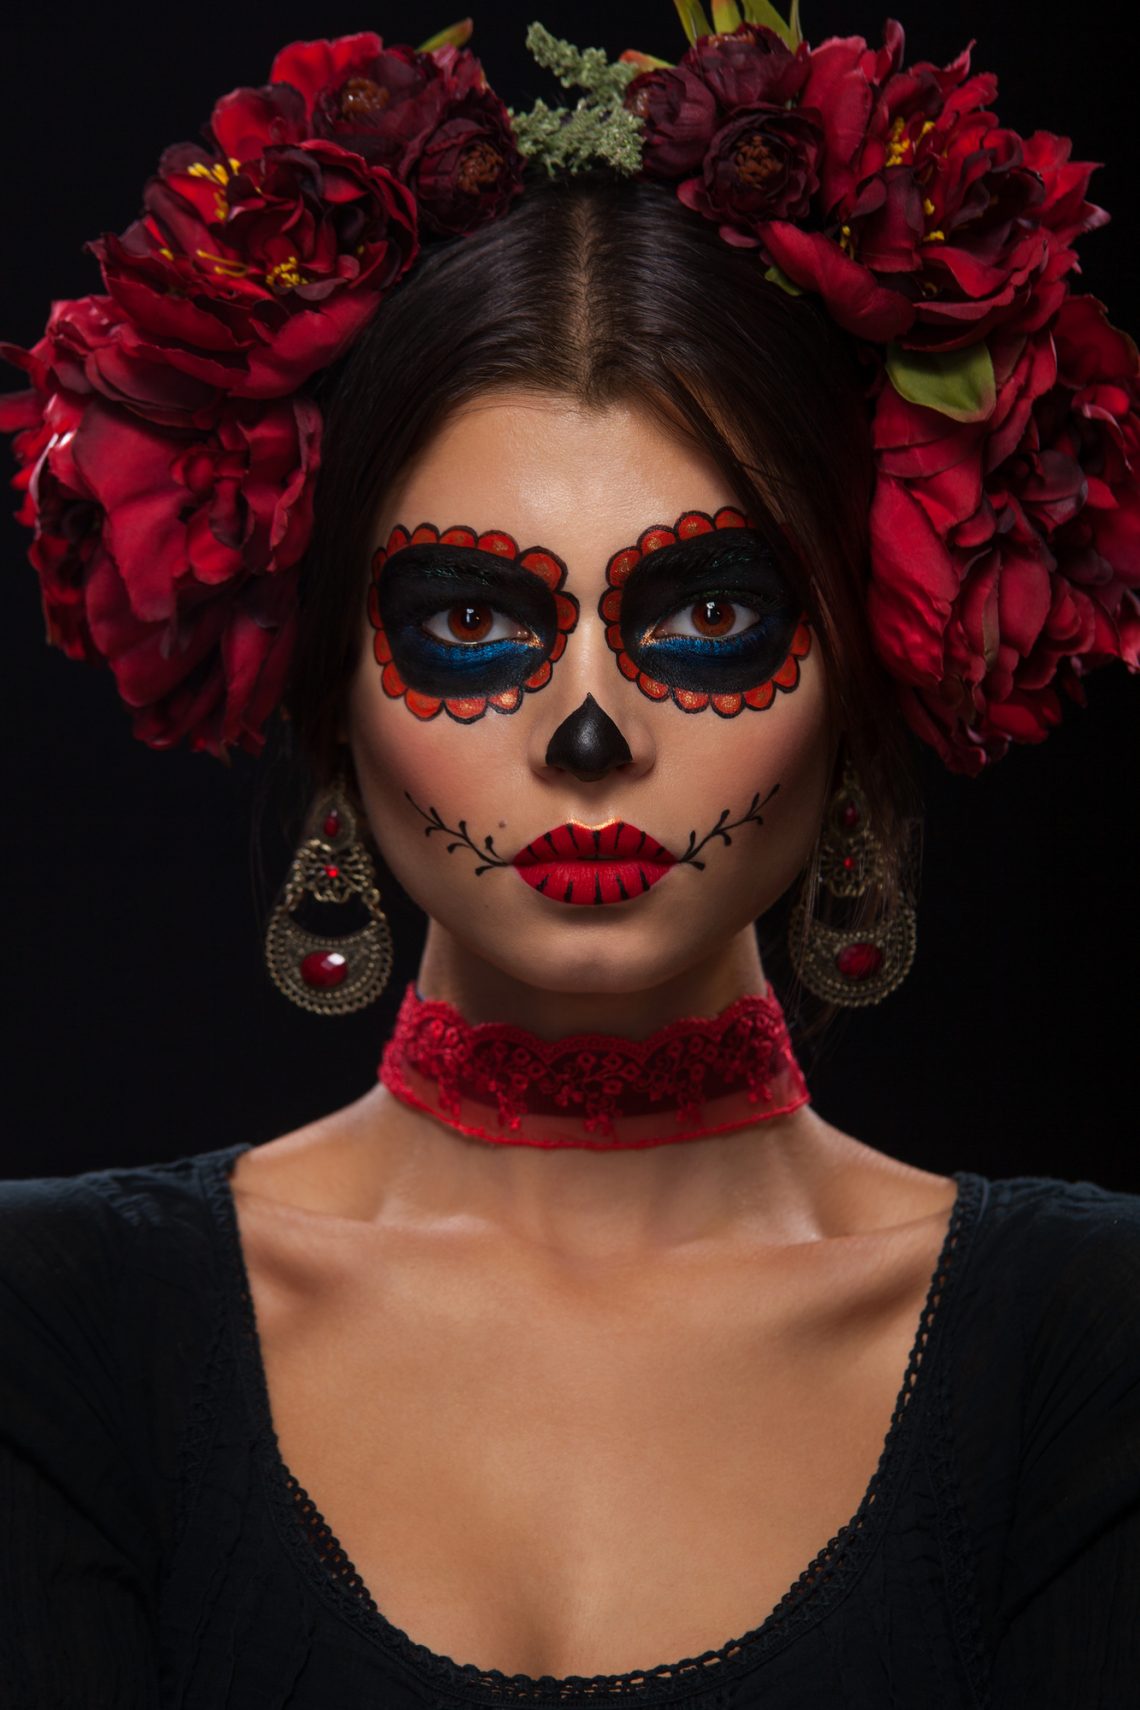 Фото девушки с ярким макияжем ко Дню мертвых